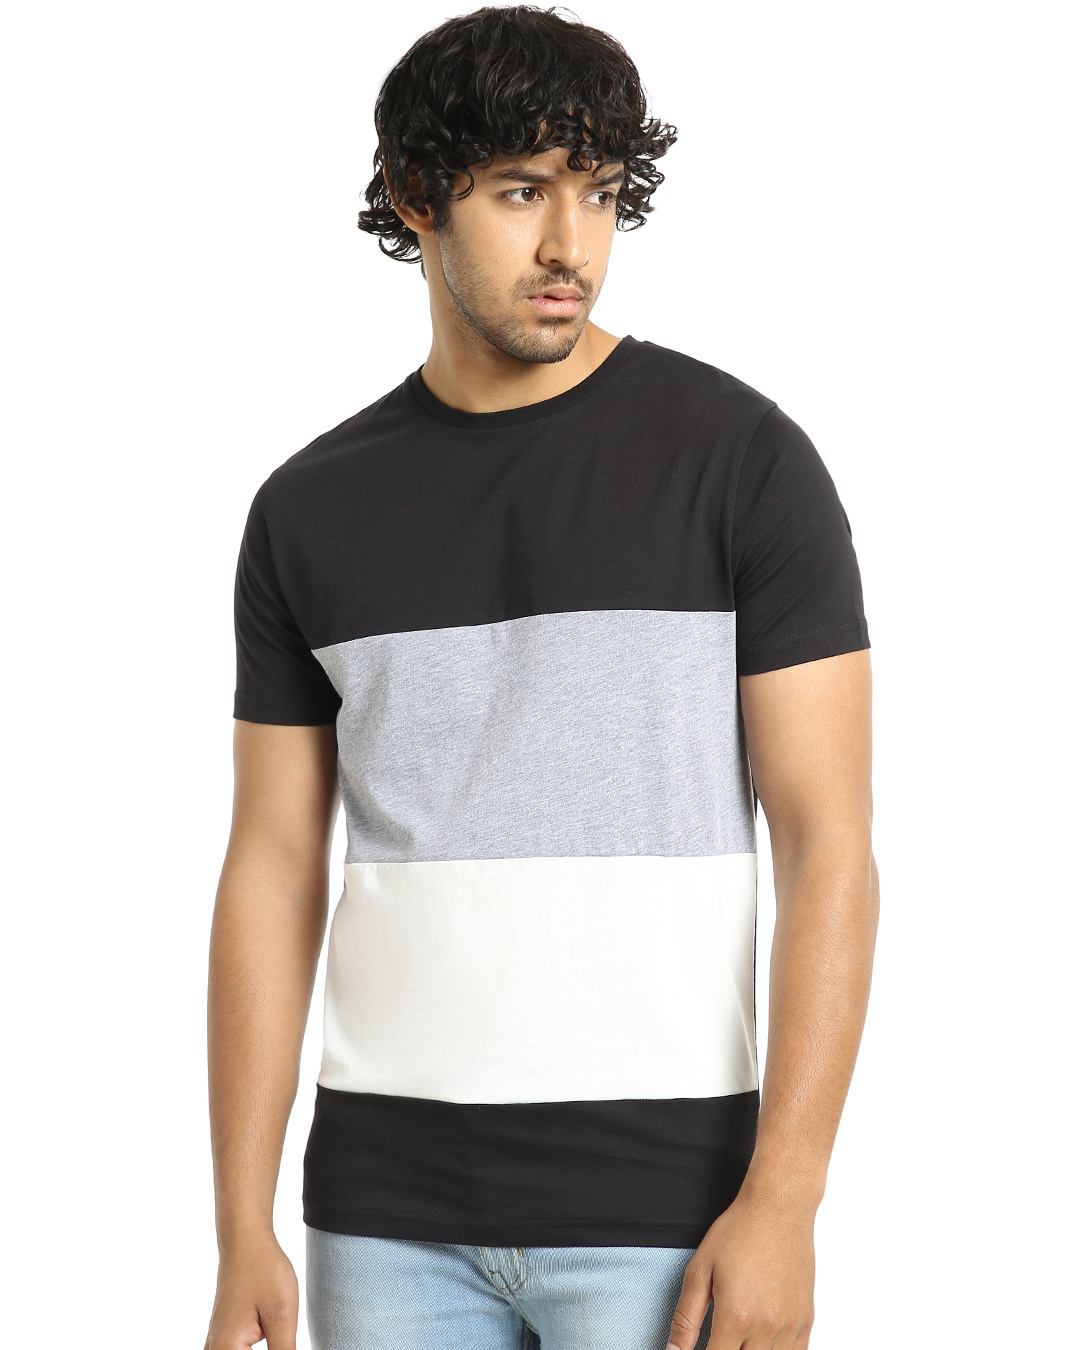 Buy Men's Black & Grey Color Block T-shirt Online at Bewakoof